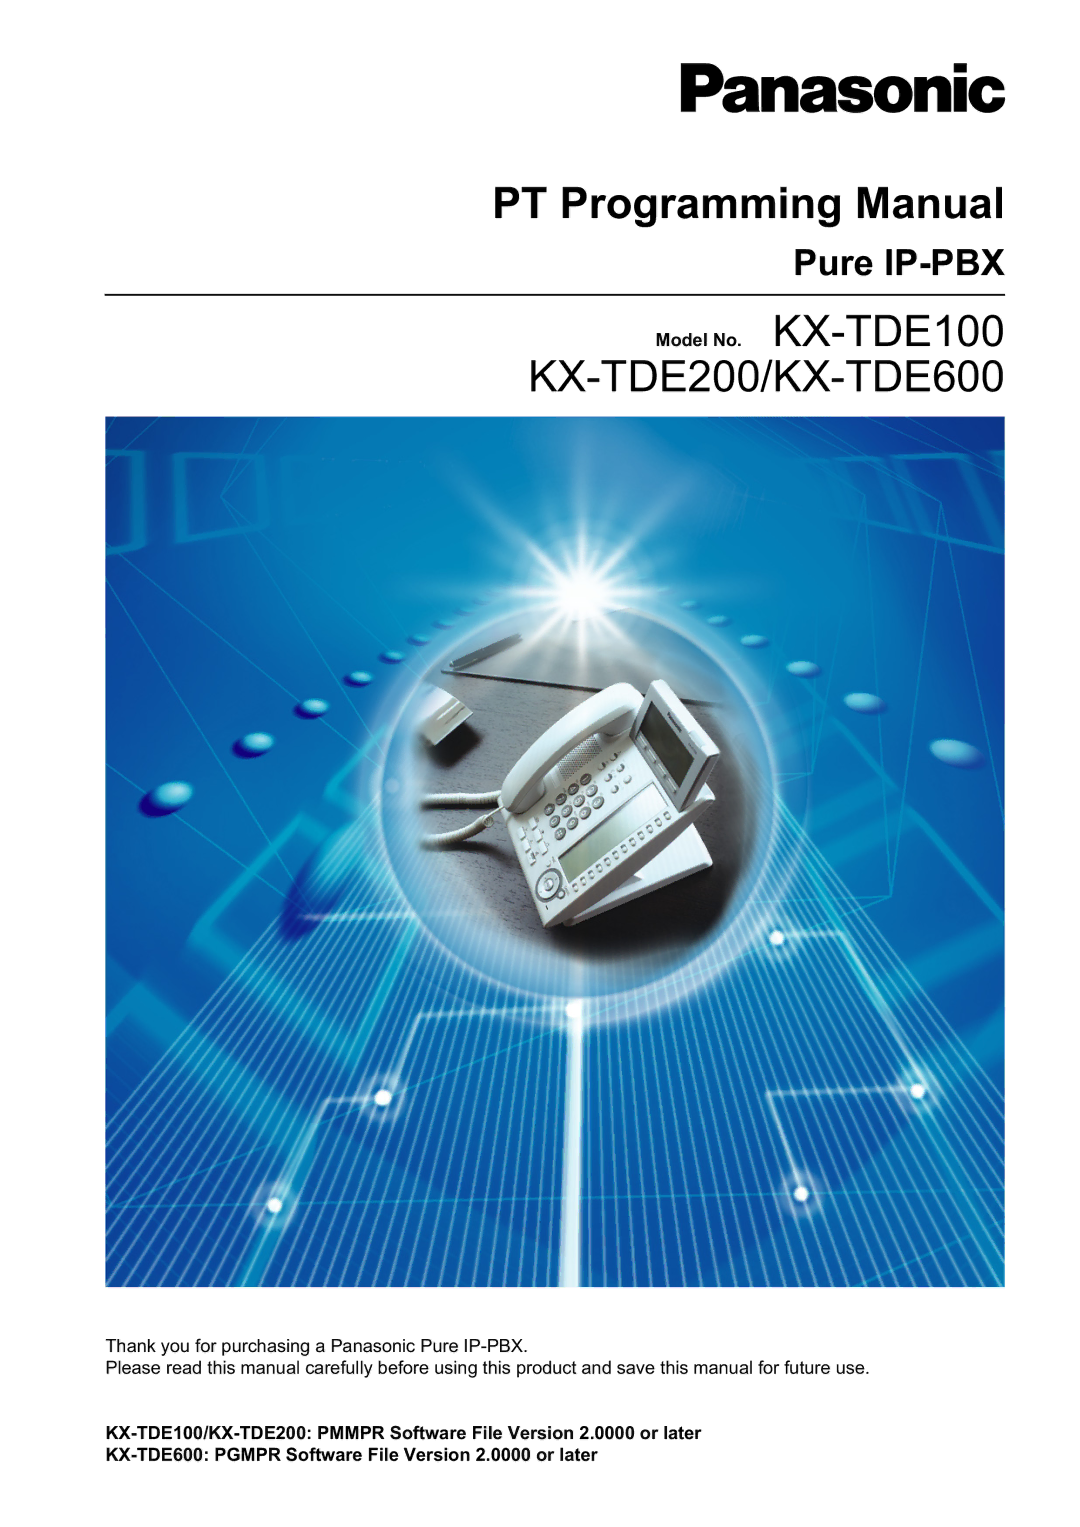 Panasonic KX-TED100 manual PT Programming Manual, Model No. KX-TDE100 